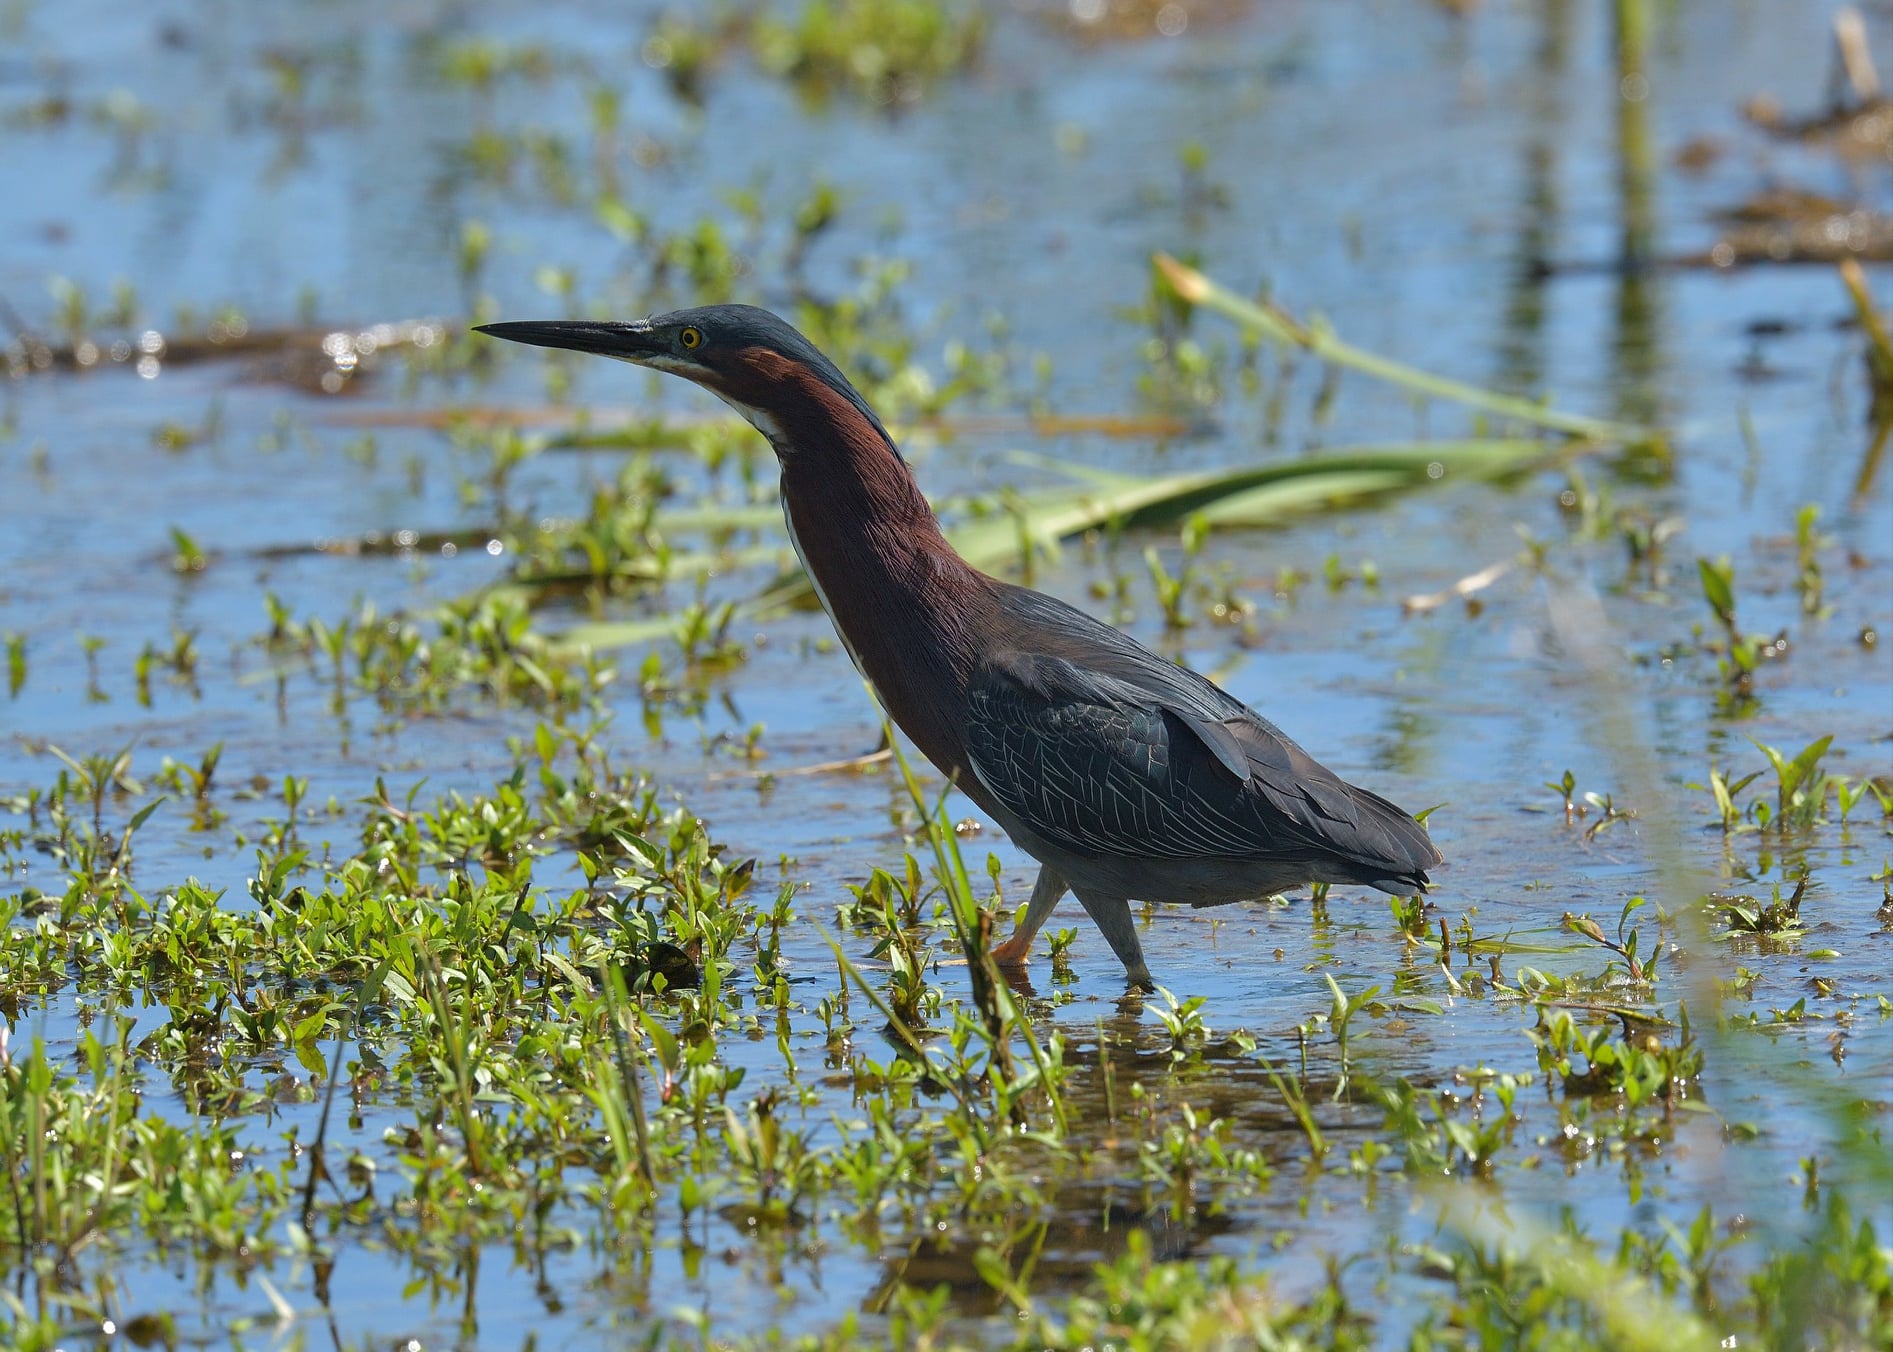 Wildlife in the marsh via Little River Wetlands Project